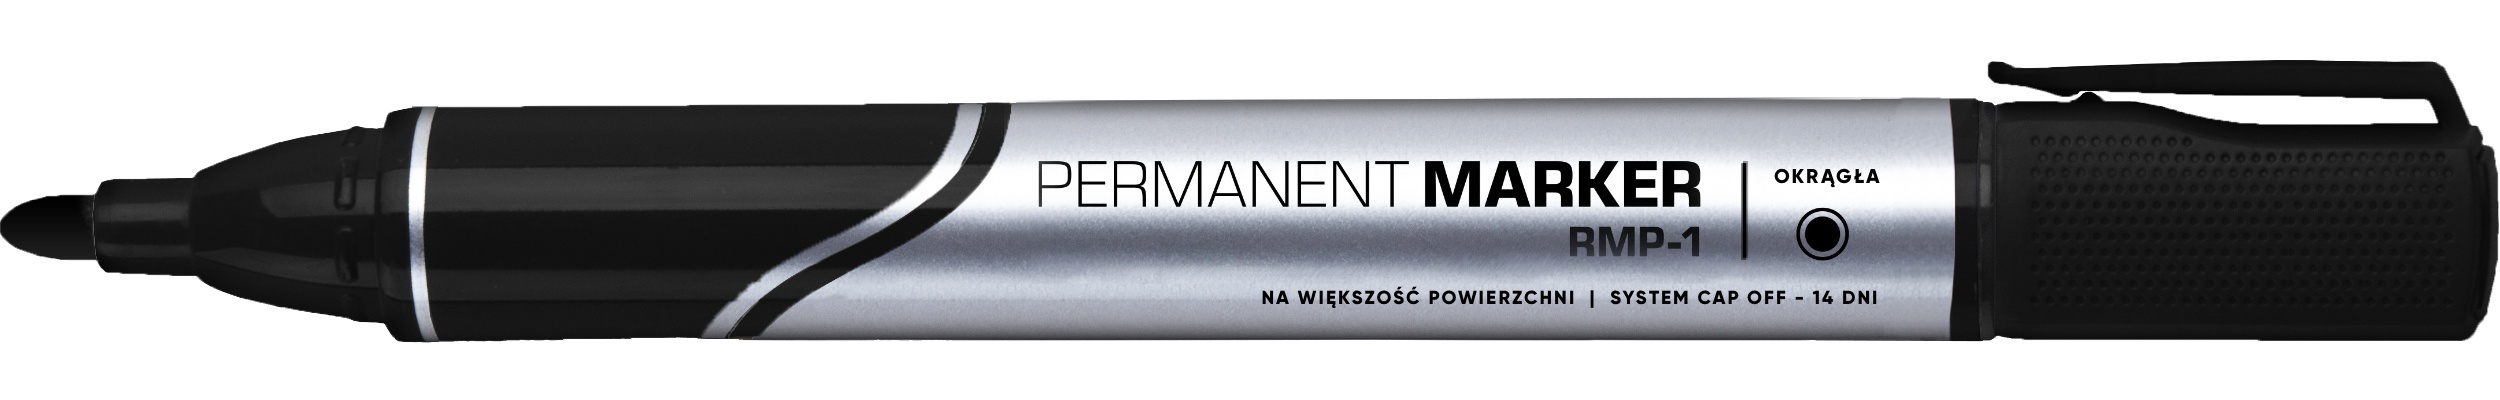 RMP-1 Permanent Marker